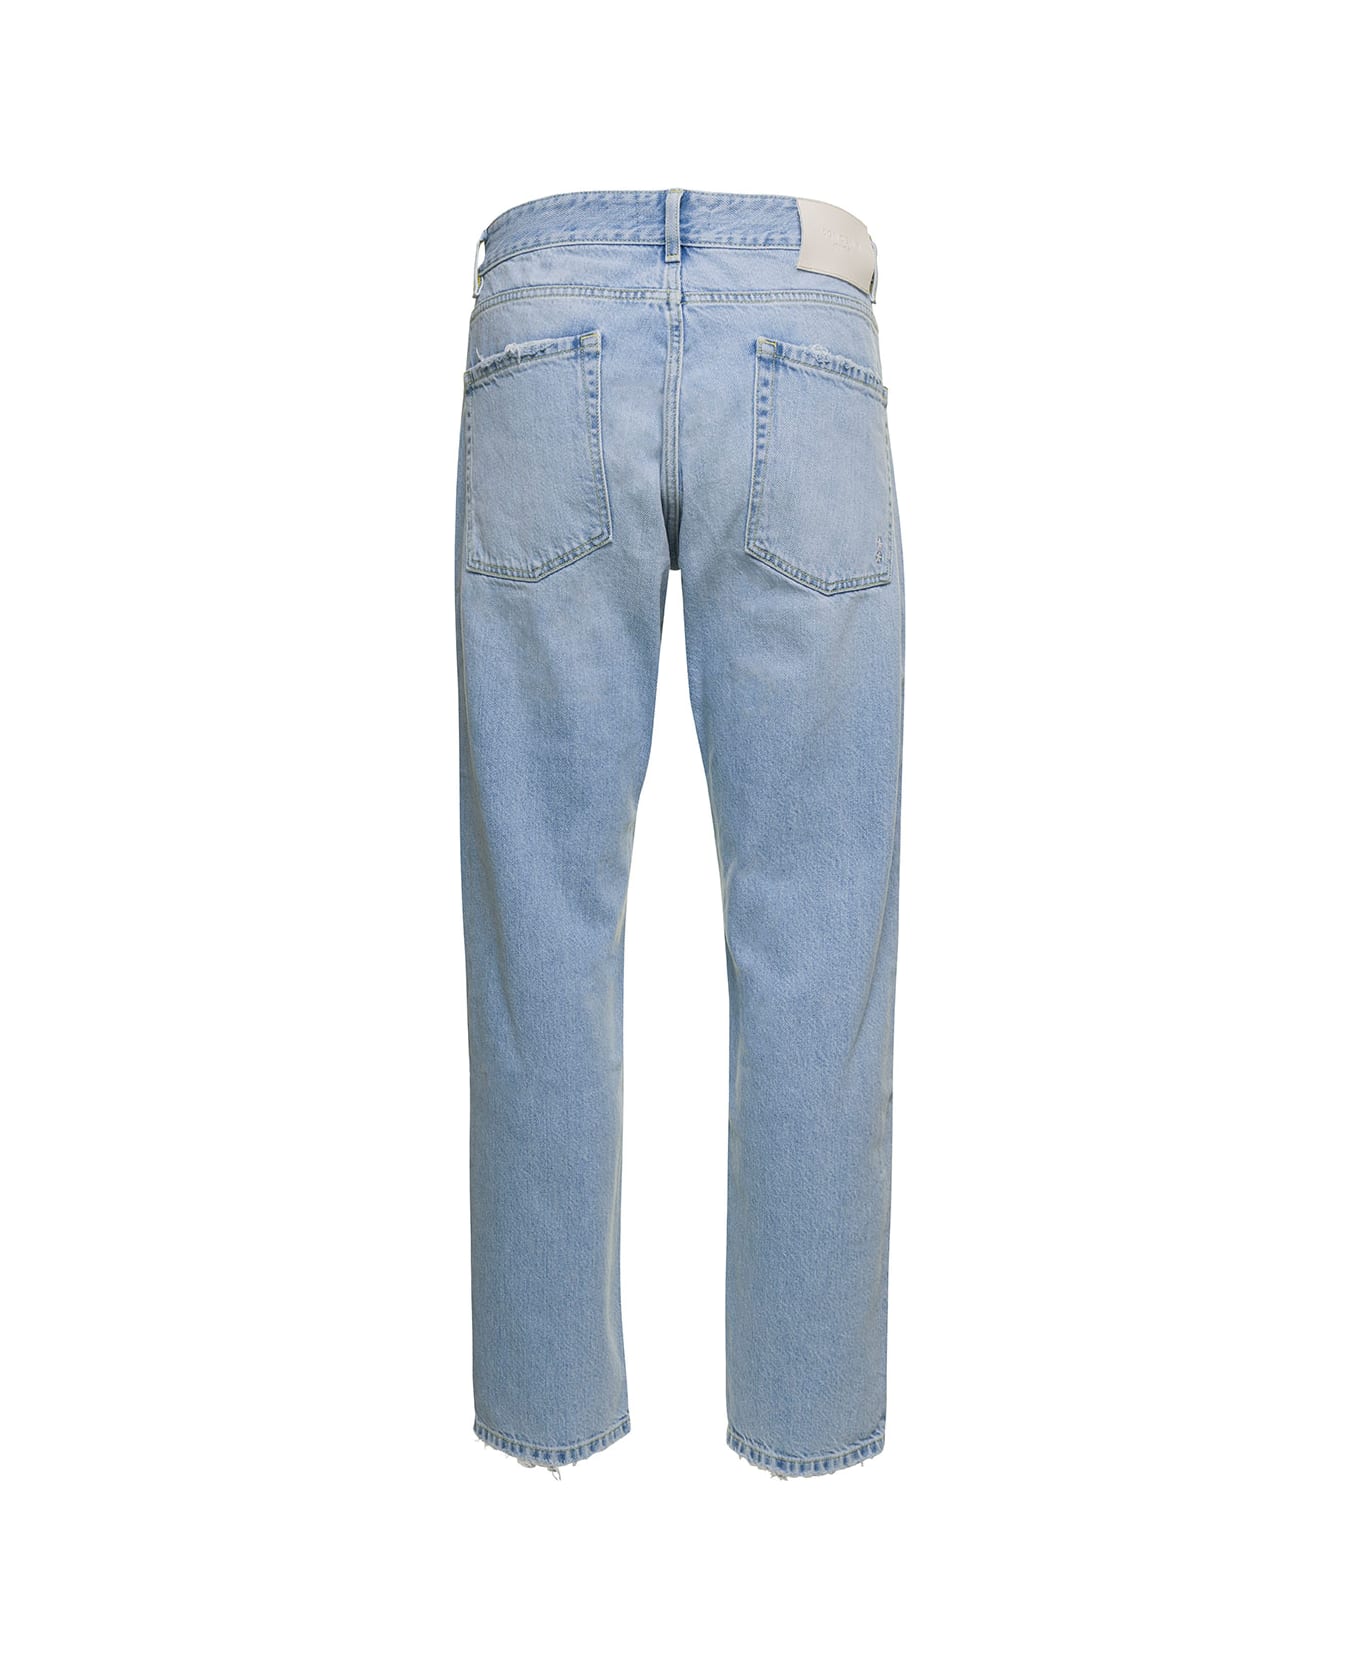 Icon Denim 'kanye' Light Blue 5-pocket Jeans With Logo Patch In Cotton Denim Man - Light blue デニム